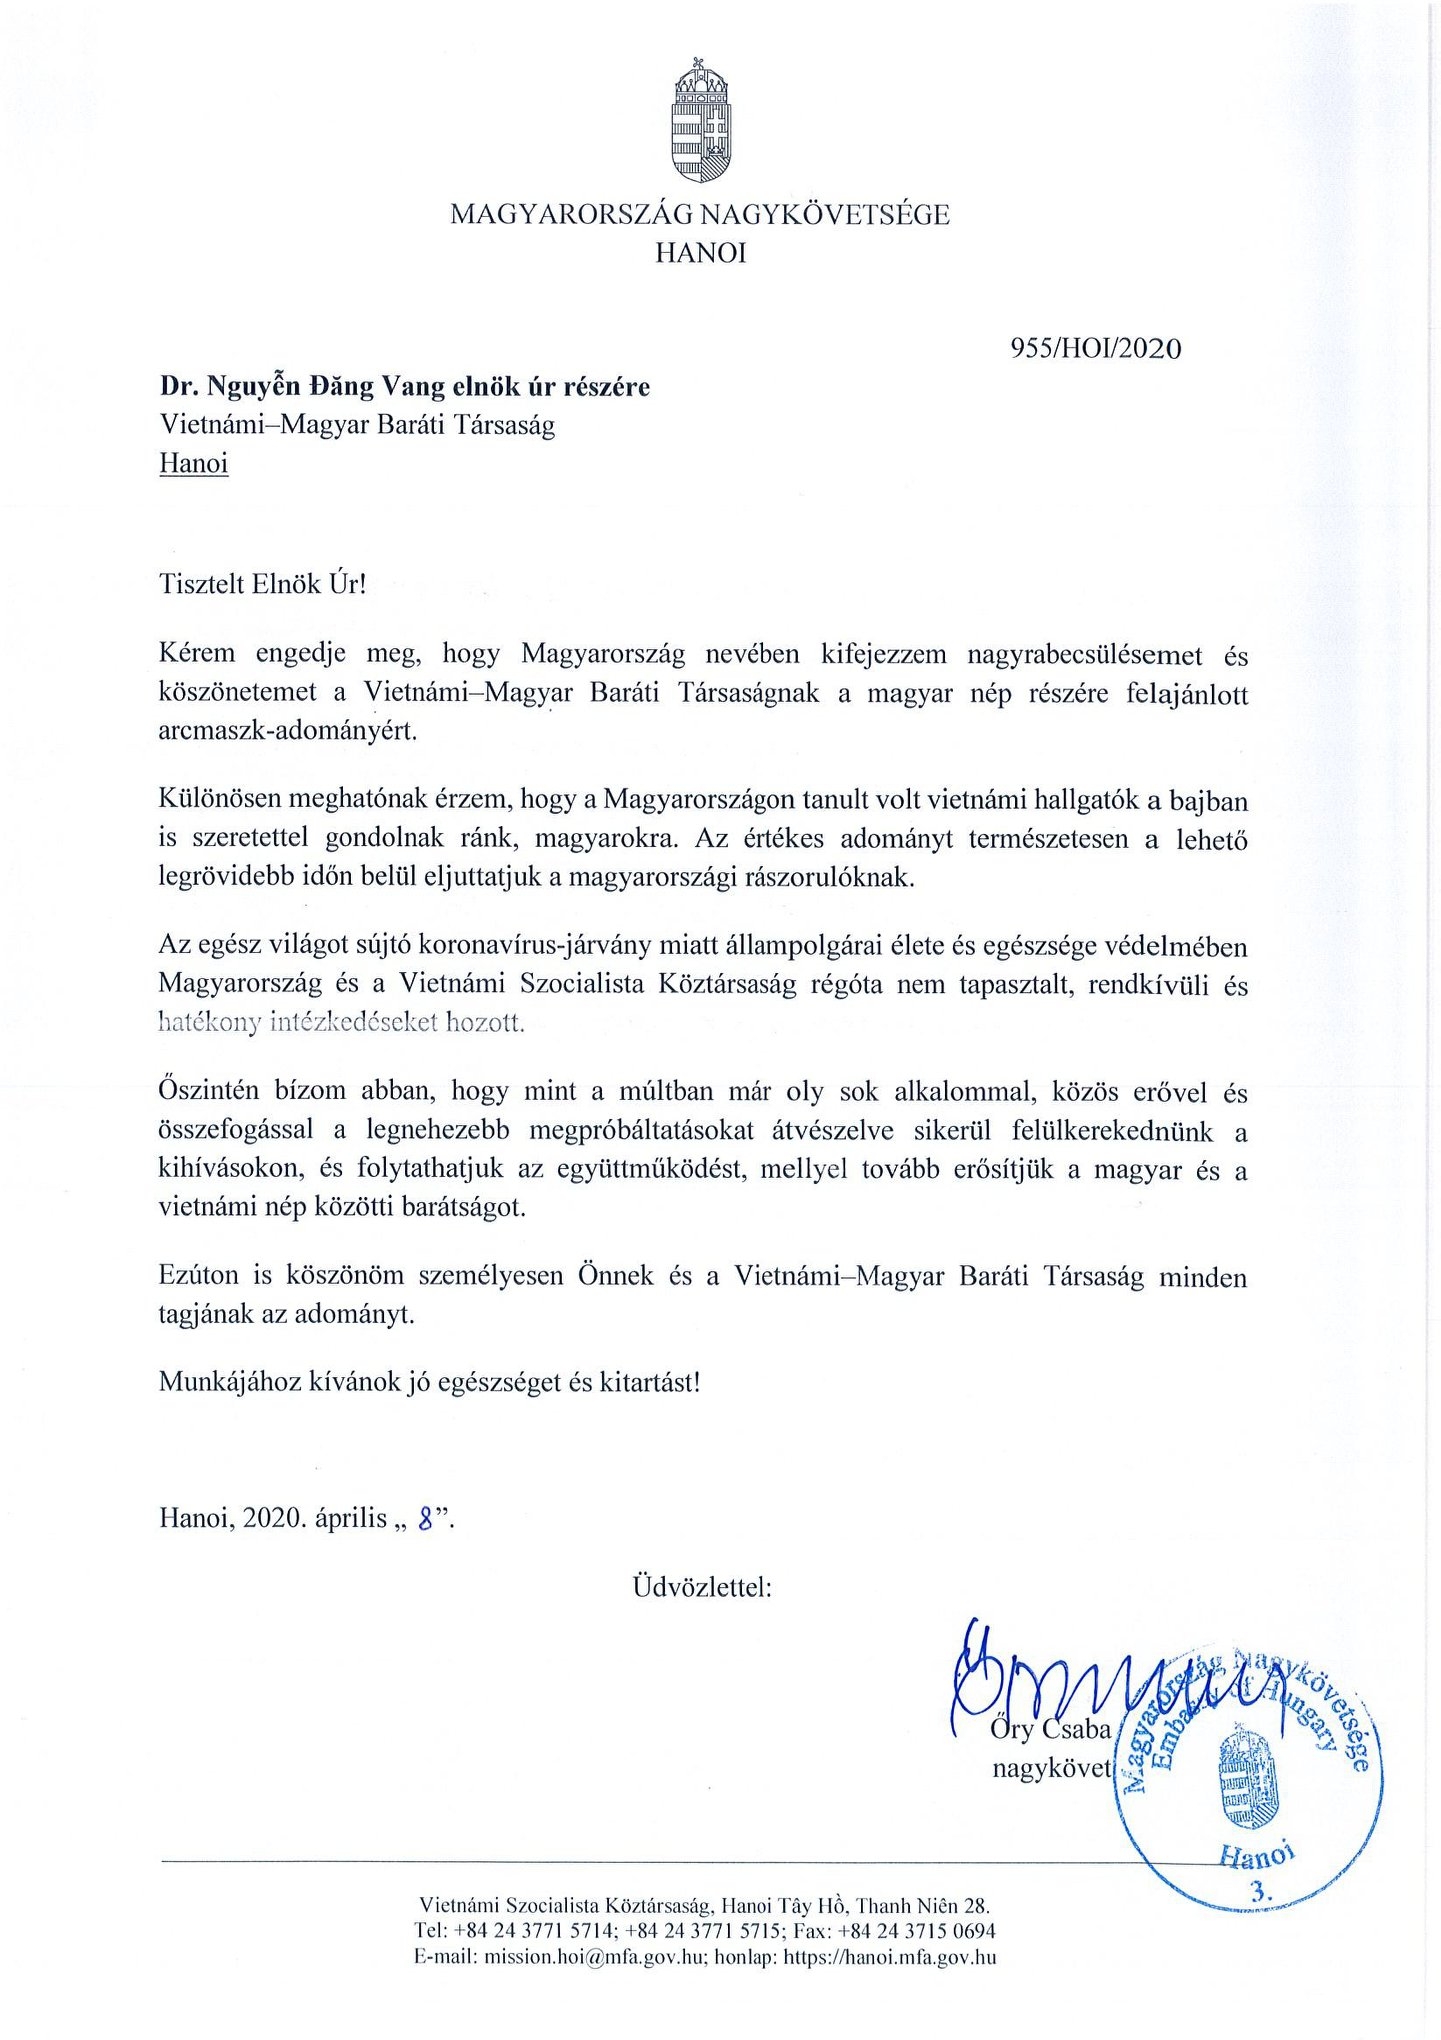 covid 19 fight ambassador sends thank you letter to vietnam hungary friendship association